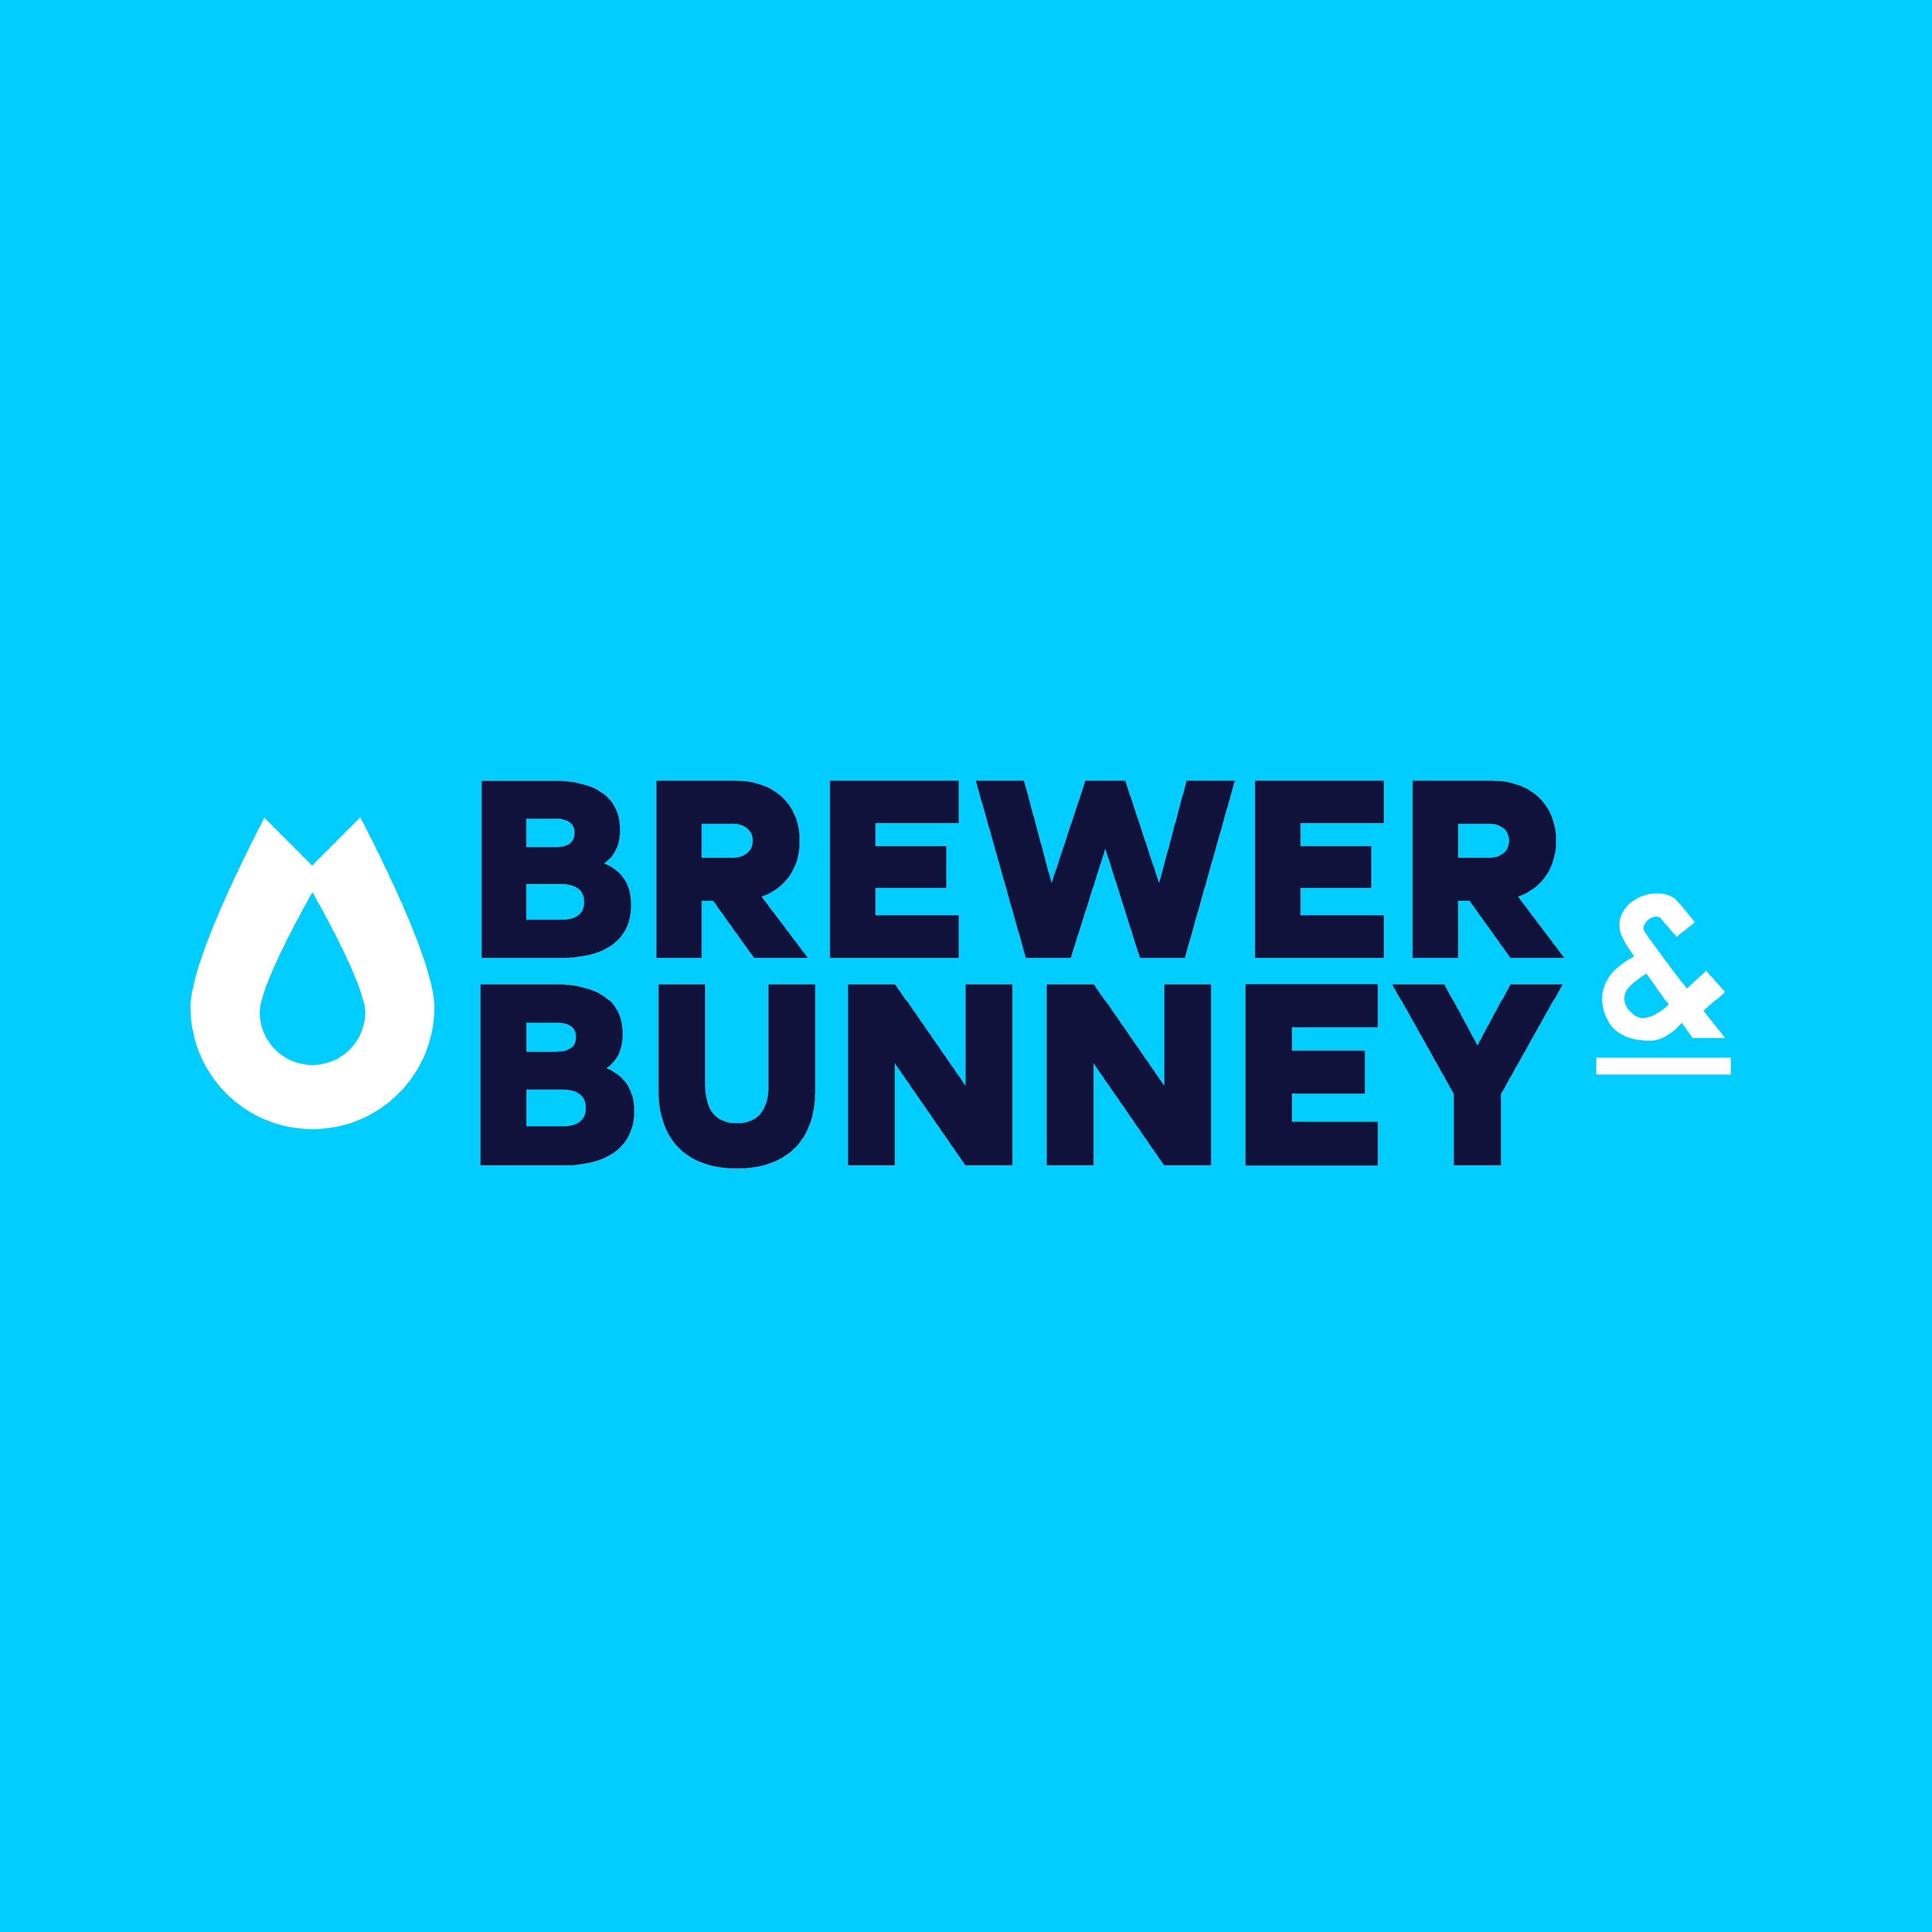 Brewer & Bunney